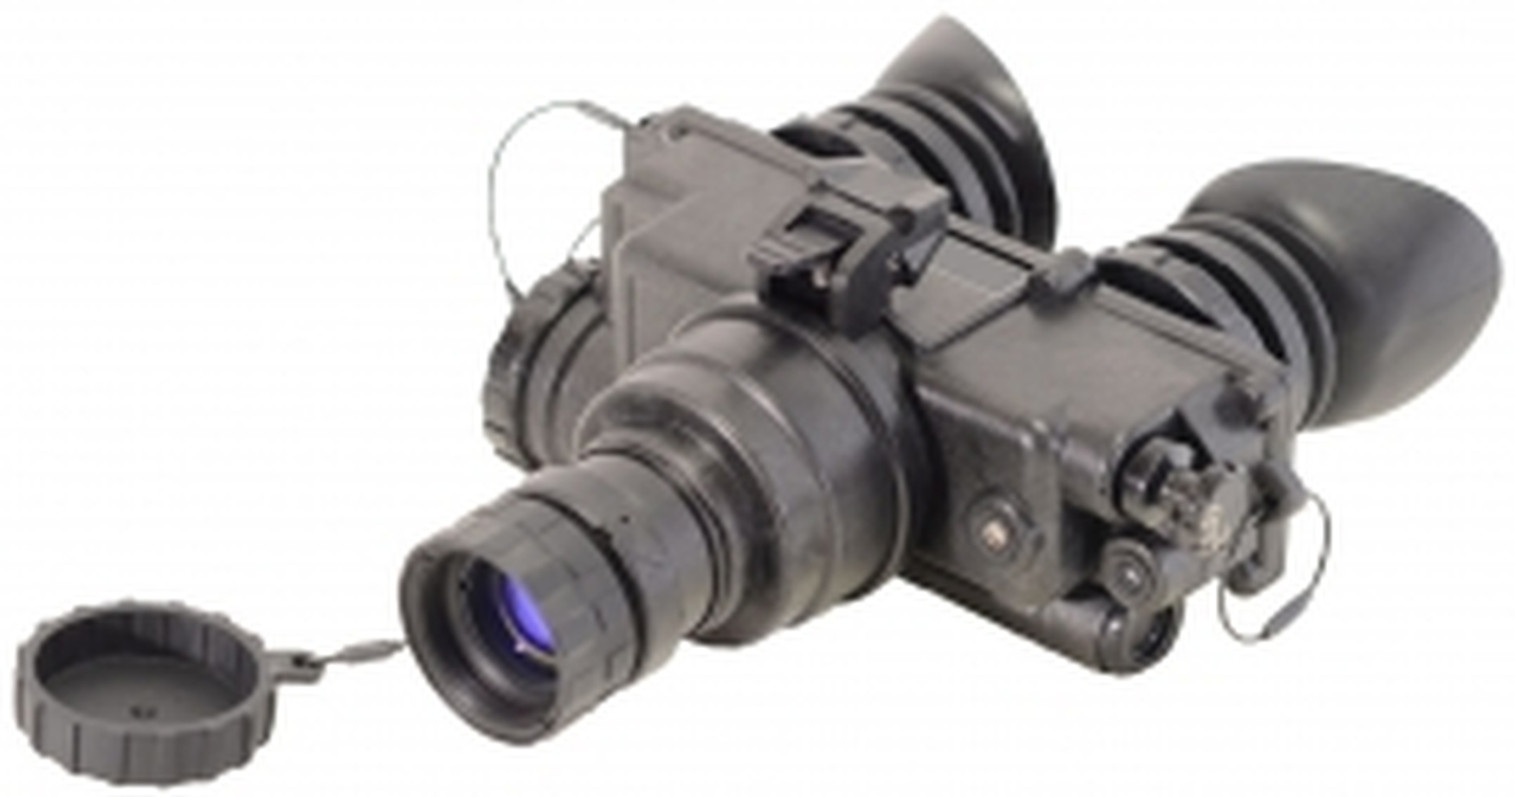 PVS-7 Night Vision Goggles-Binoculars - Mix & Match